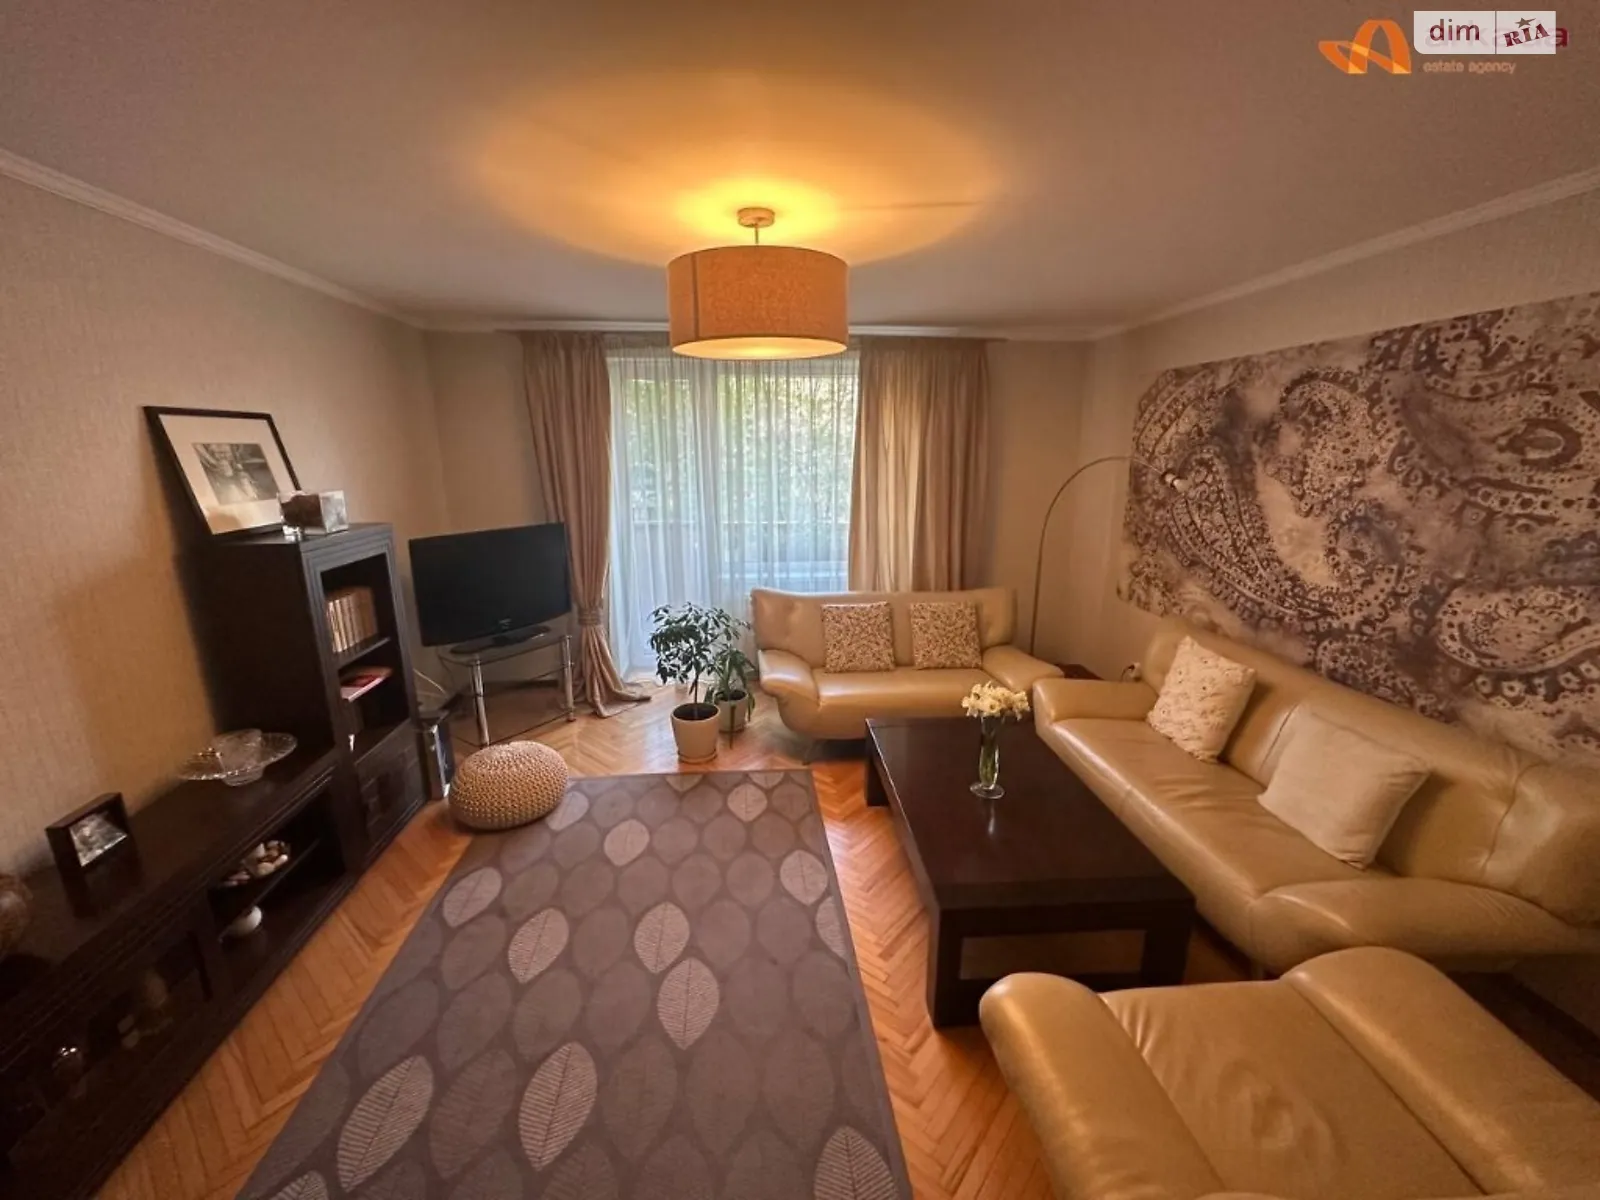 Продается 3-комнатная квартира 65.9 кв. м в Ивано-Франковске - фото 3